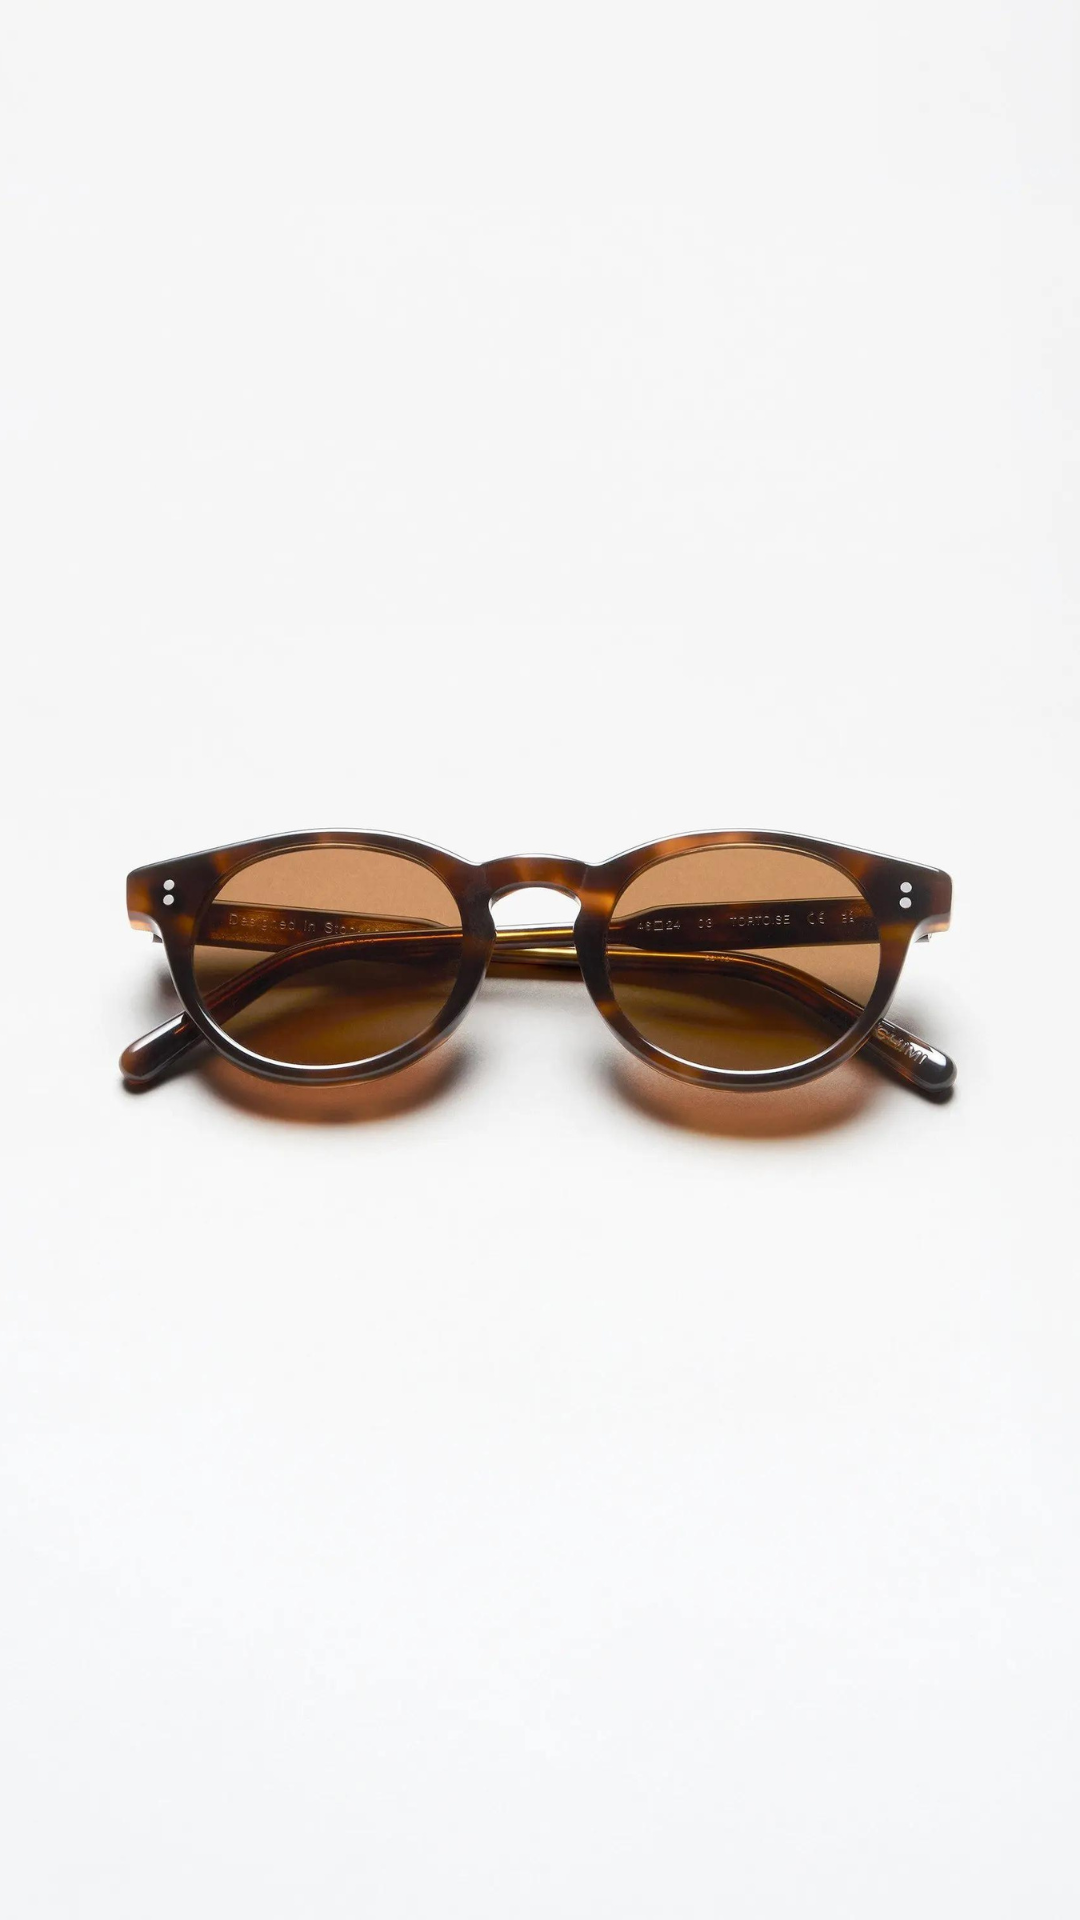 CHIMI Tortoise Sunglasses